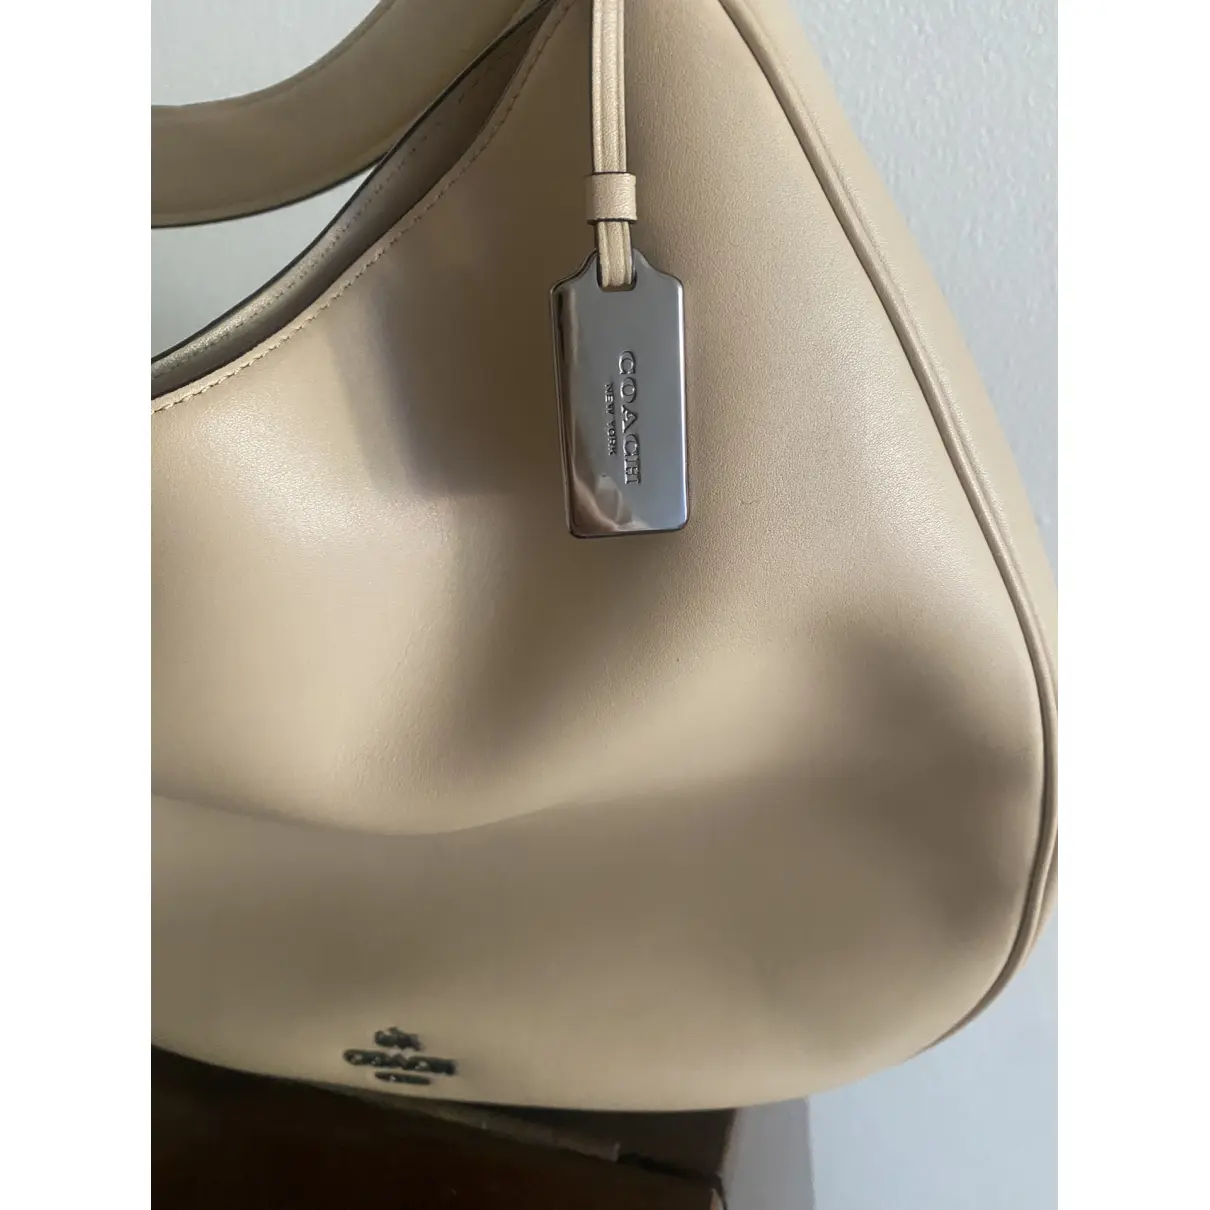 Buy Coach Scout Hobo leather handbag online